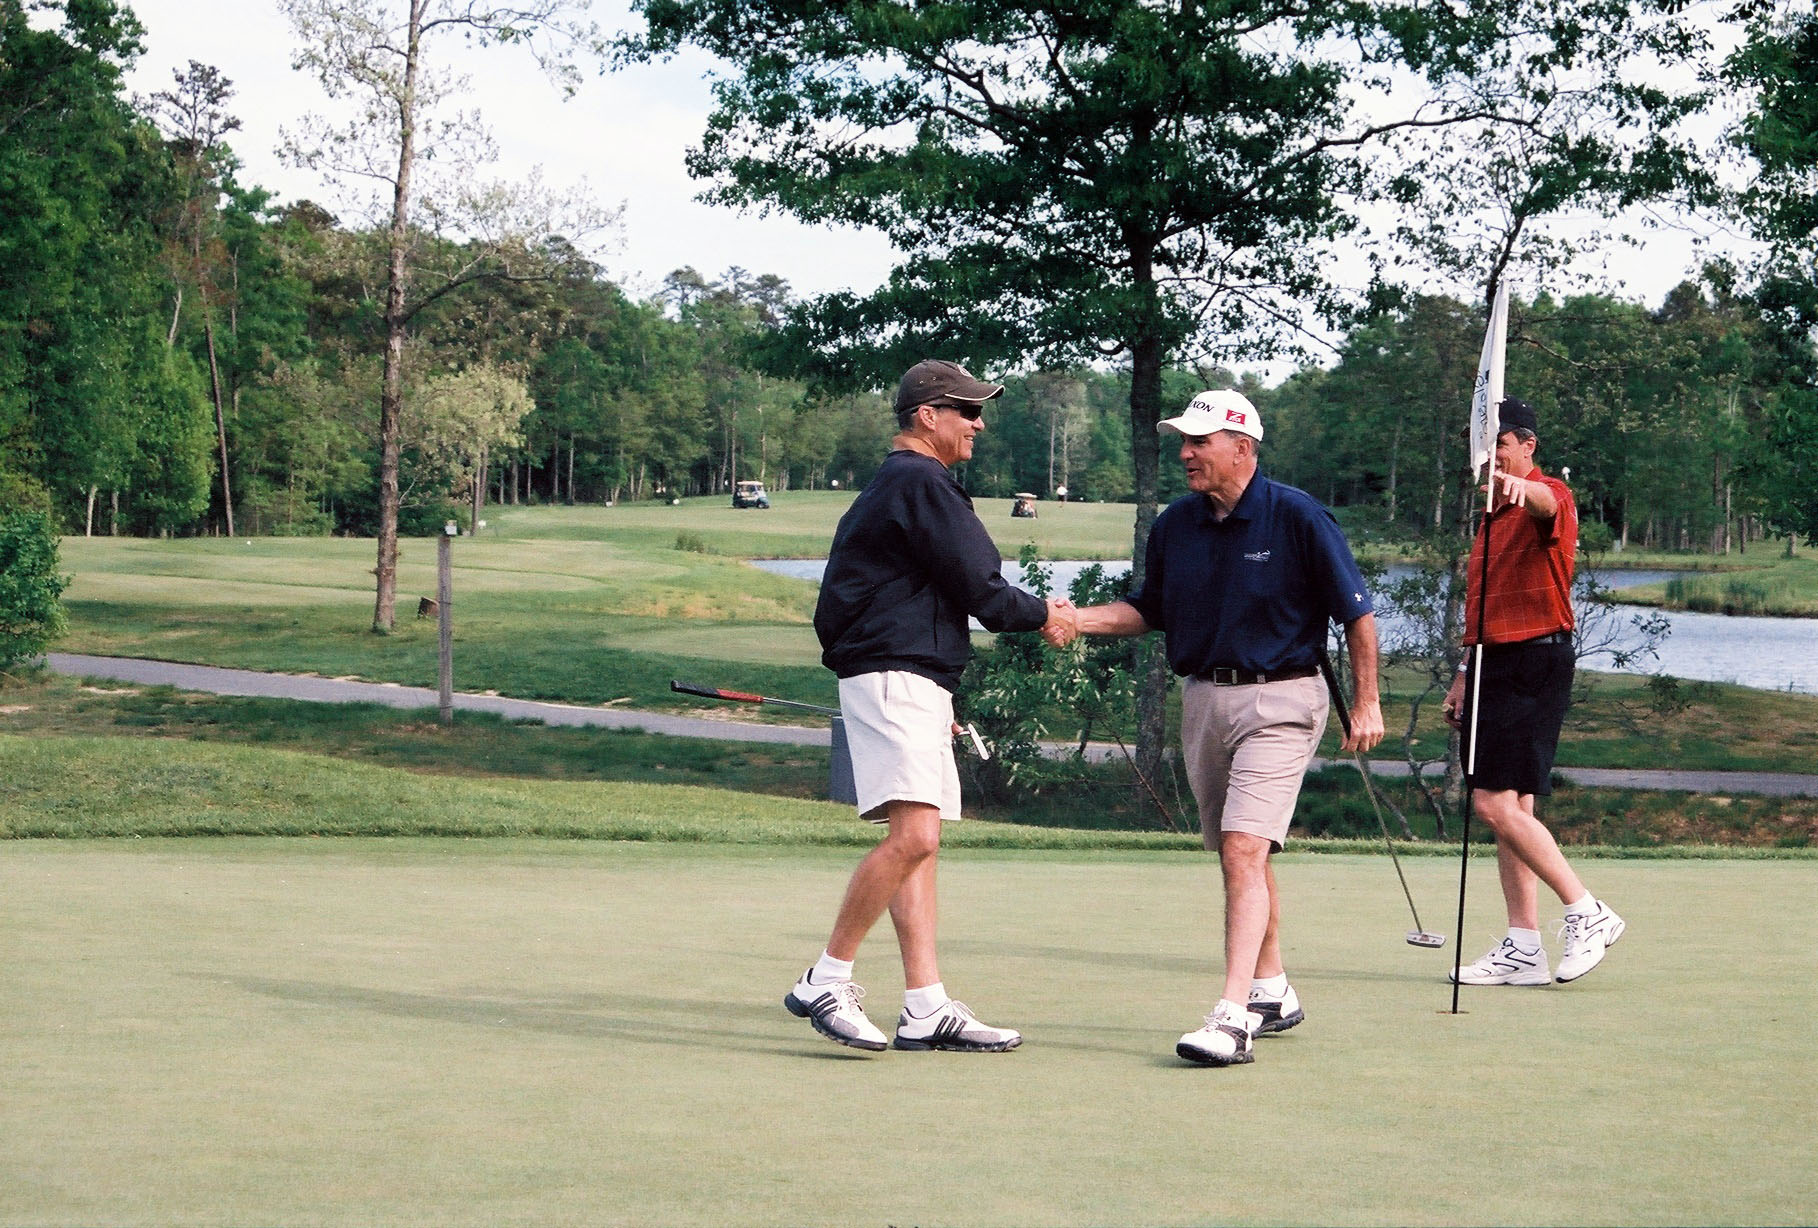  L to R: TK, Bob Losinger and Mike Dalessio
2010 Theta Chi Golf Open 